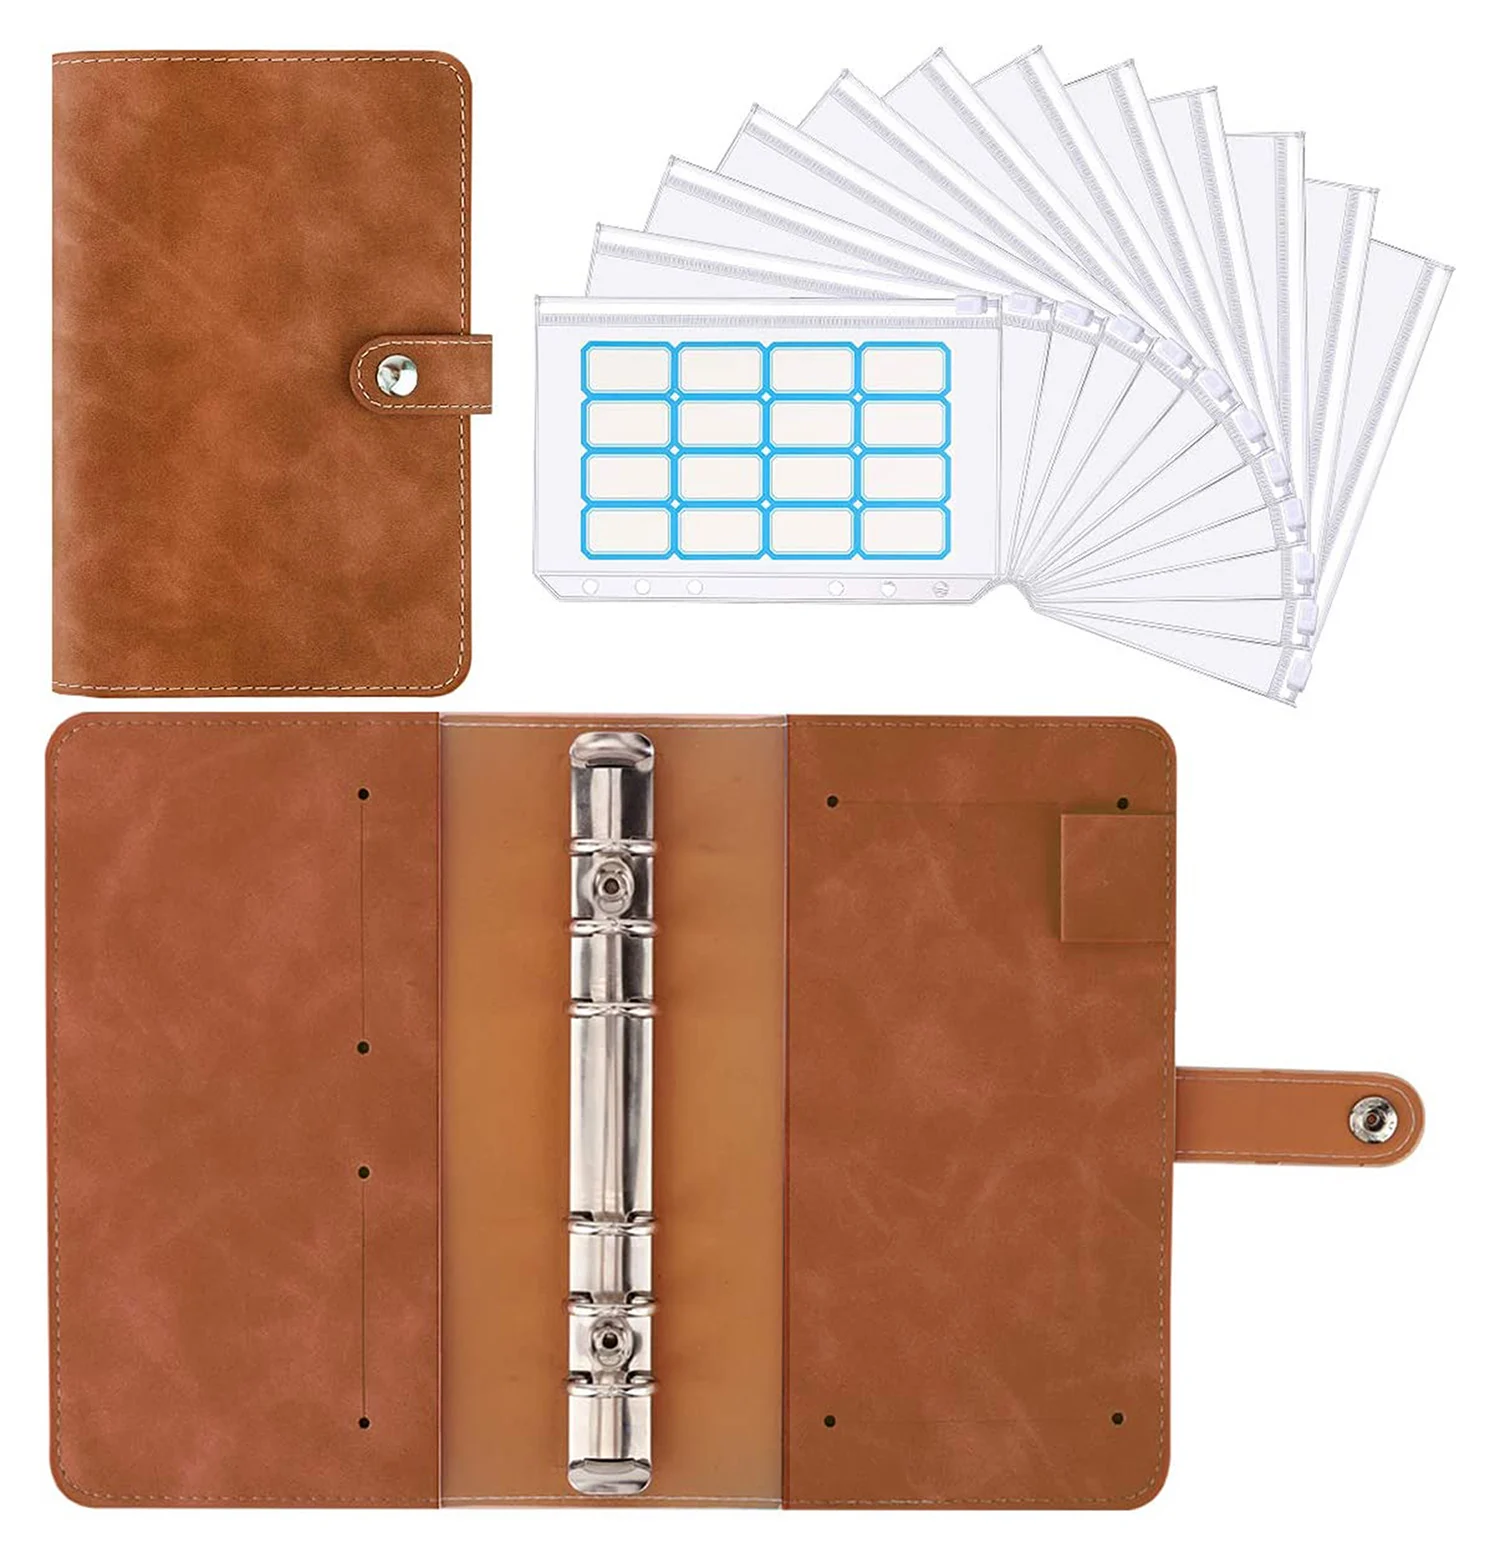 Khaki A6 Binder Notebook 6-Ring Loose Leaf PU Leather Binder Cover Folder Budget Planner with 12 Clear Cash Envelopes Pockets & Label Stickers Budget Binder with Zipper Envelopes 